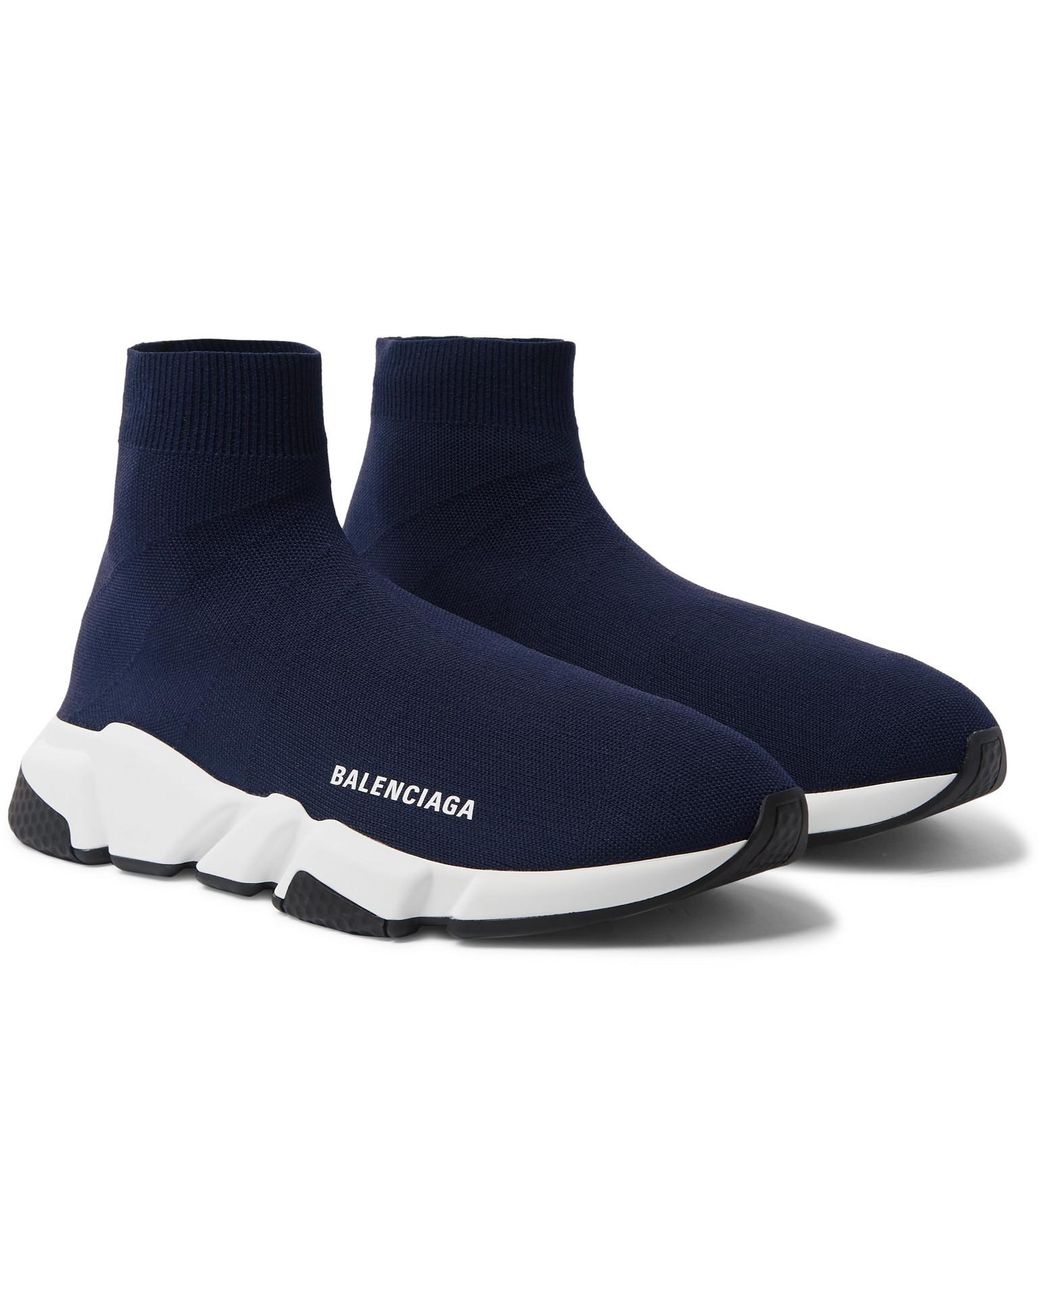 Balenciaga Speed Sock Stretch-knit Slip-on Sneakers in Blue for Men - Lyst